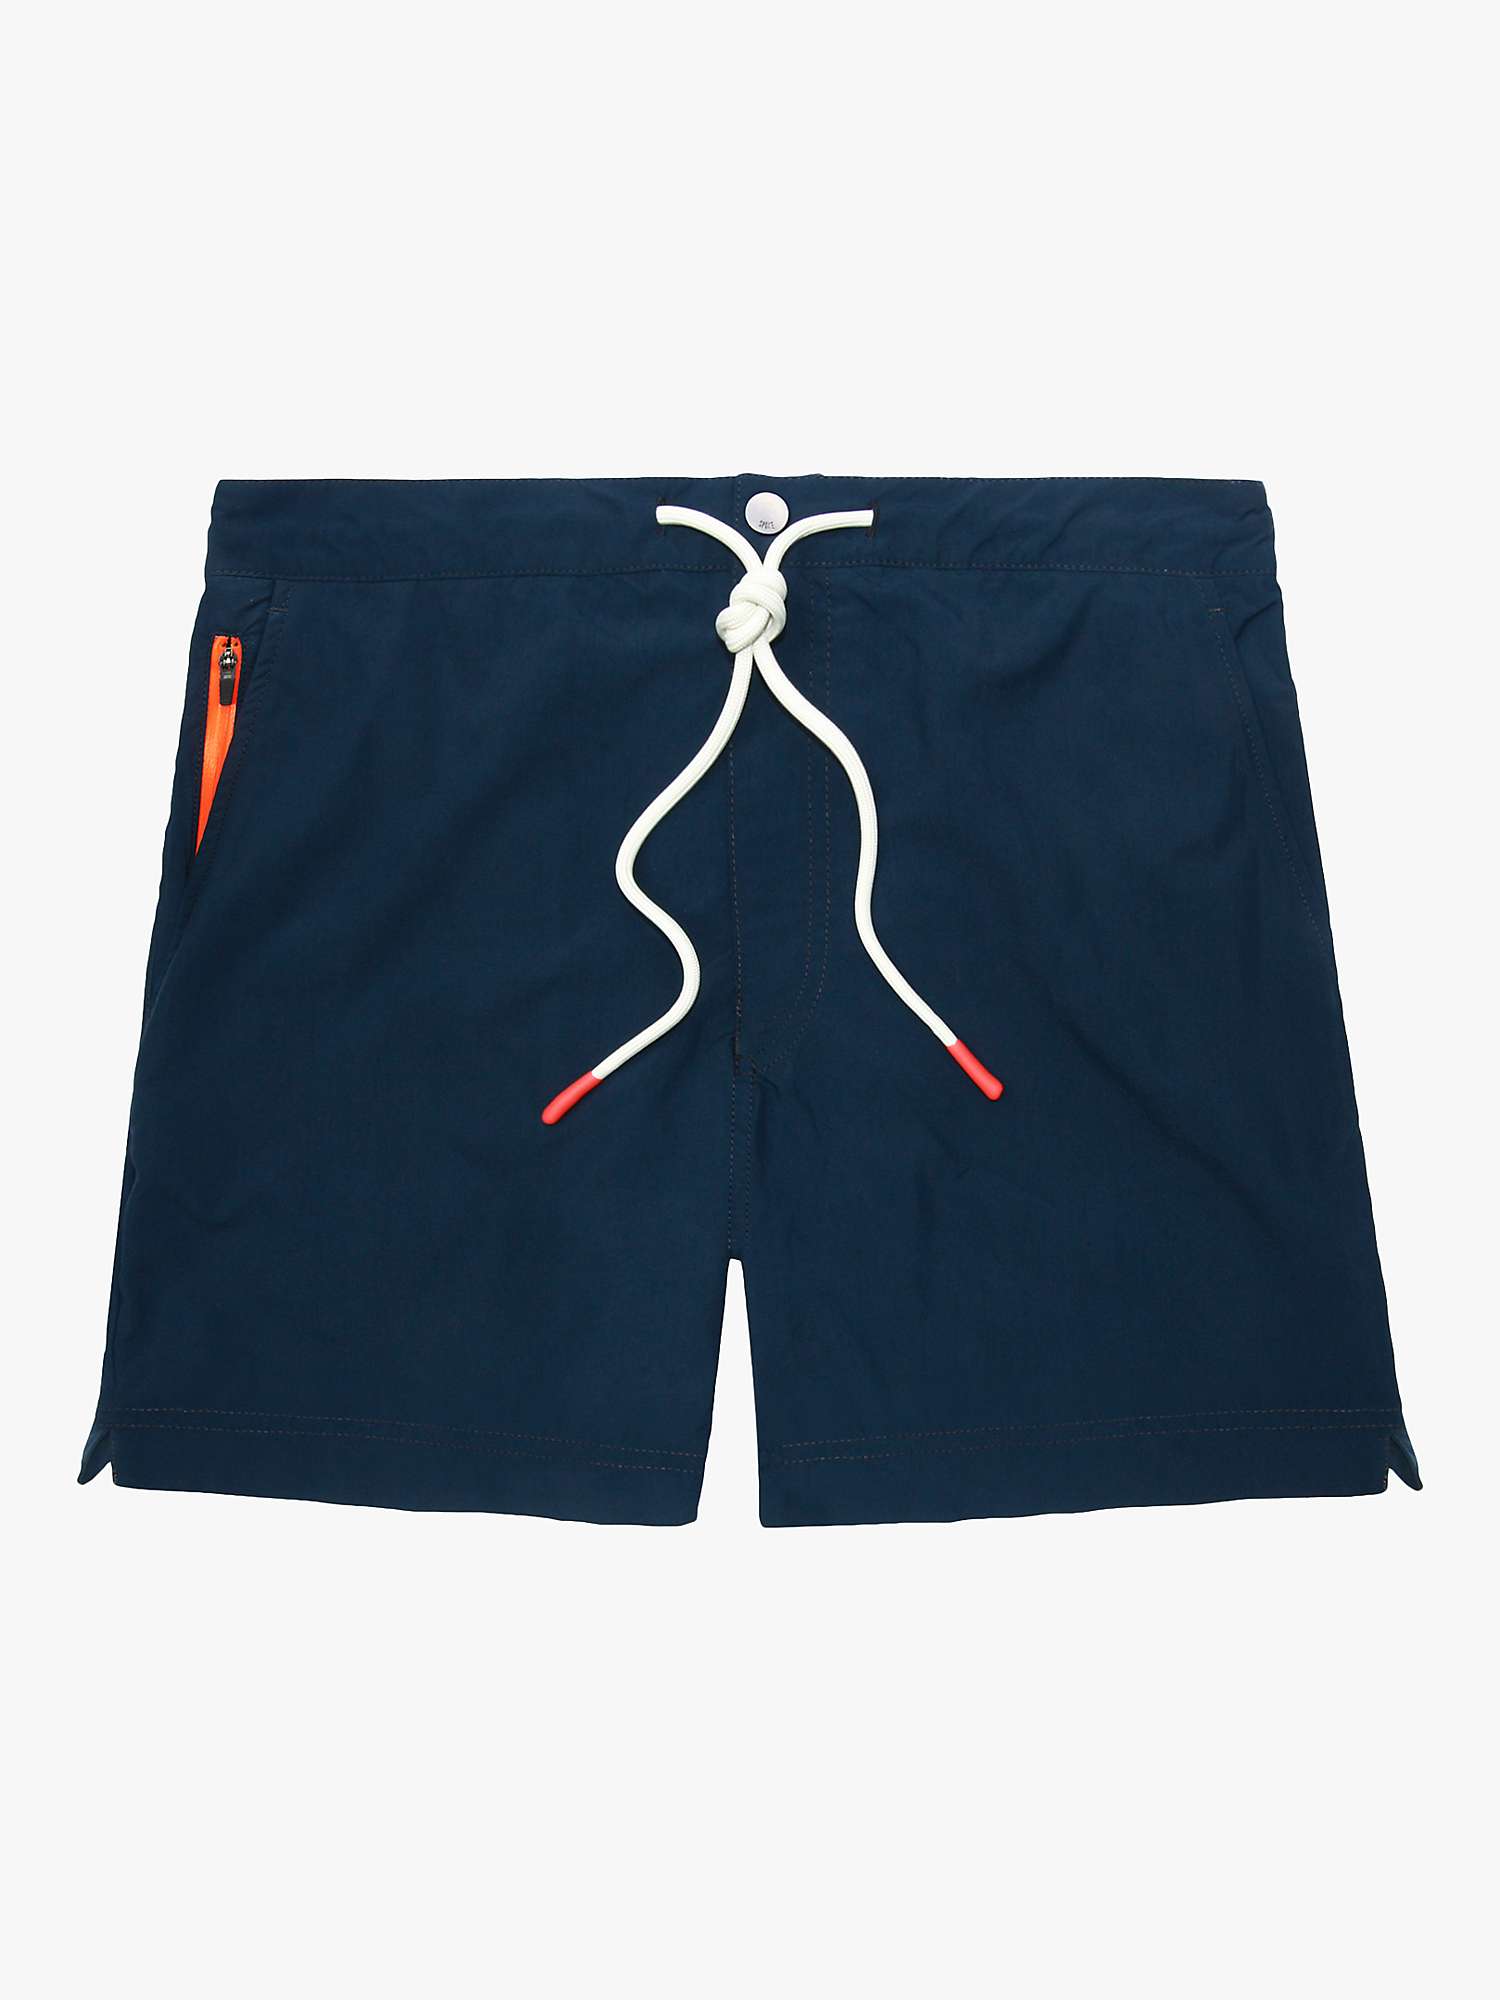 Buy SPOKE Swims Regular Thigh Swim Shorts, Navy Online at johnlewis.com